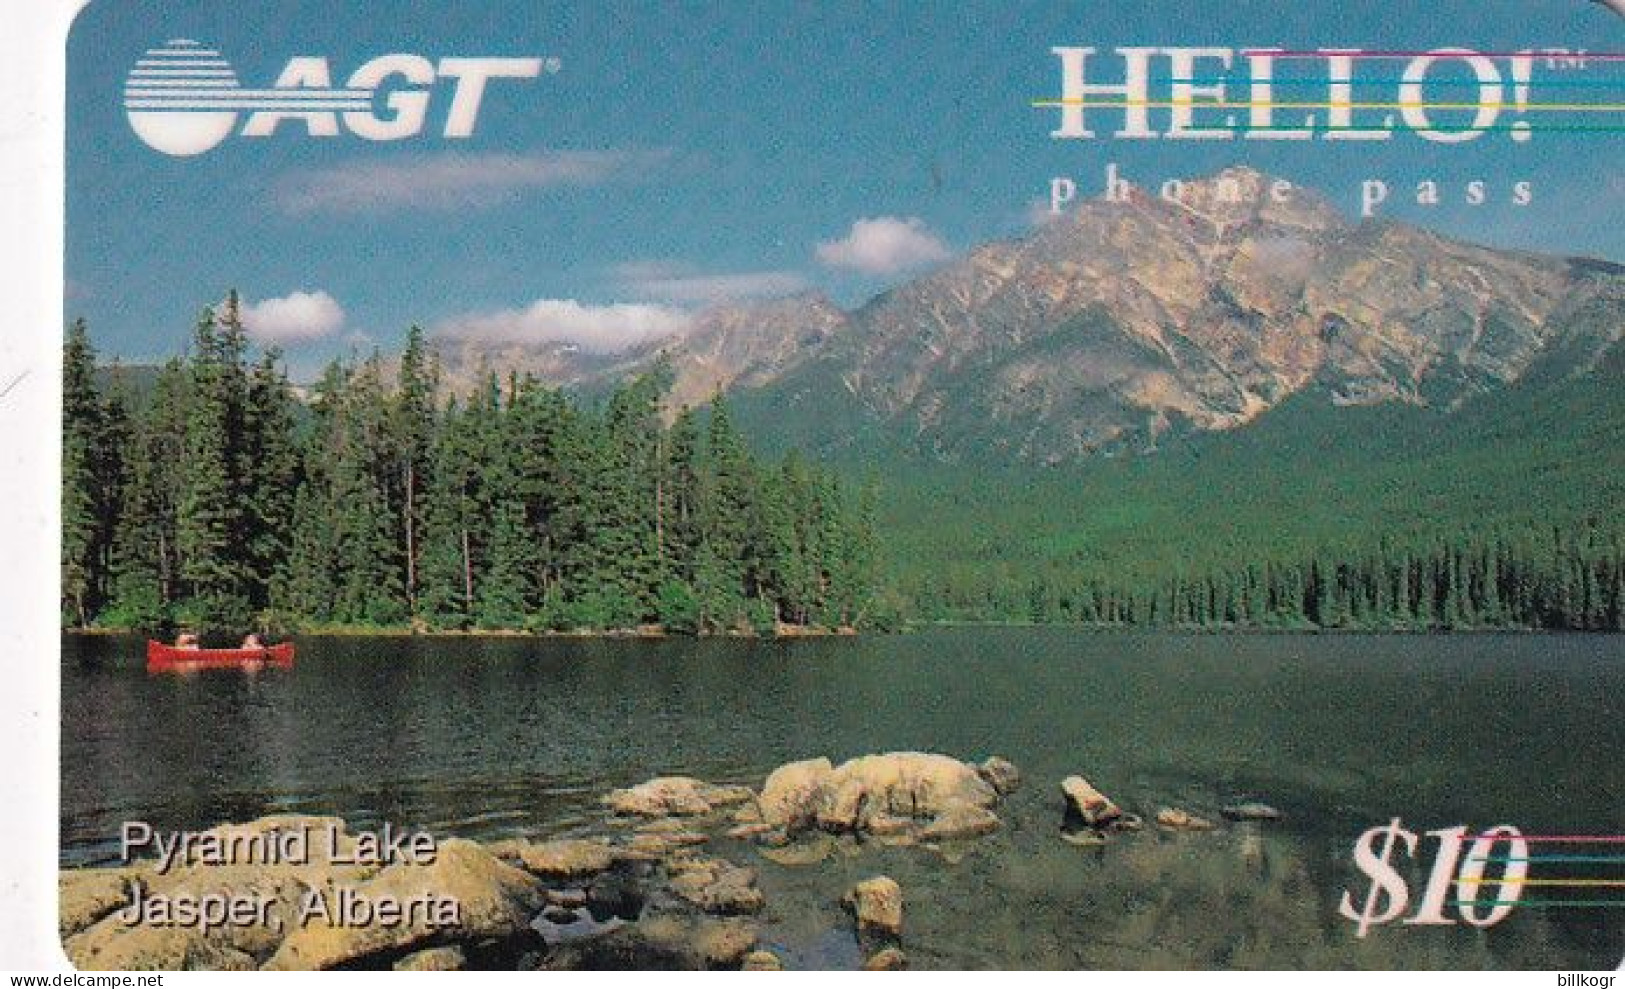 CANADA - Pyramid Lake, Jasper/Alberta, AGT Prepaid Card $10, Used - Kanada